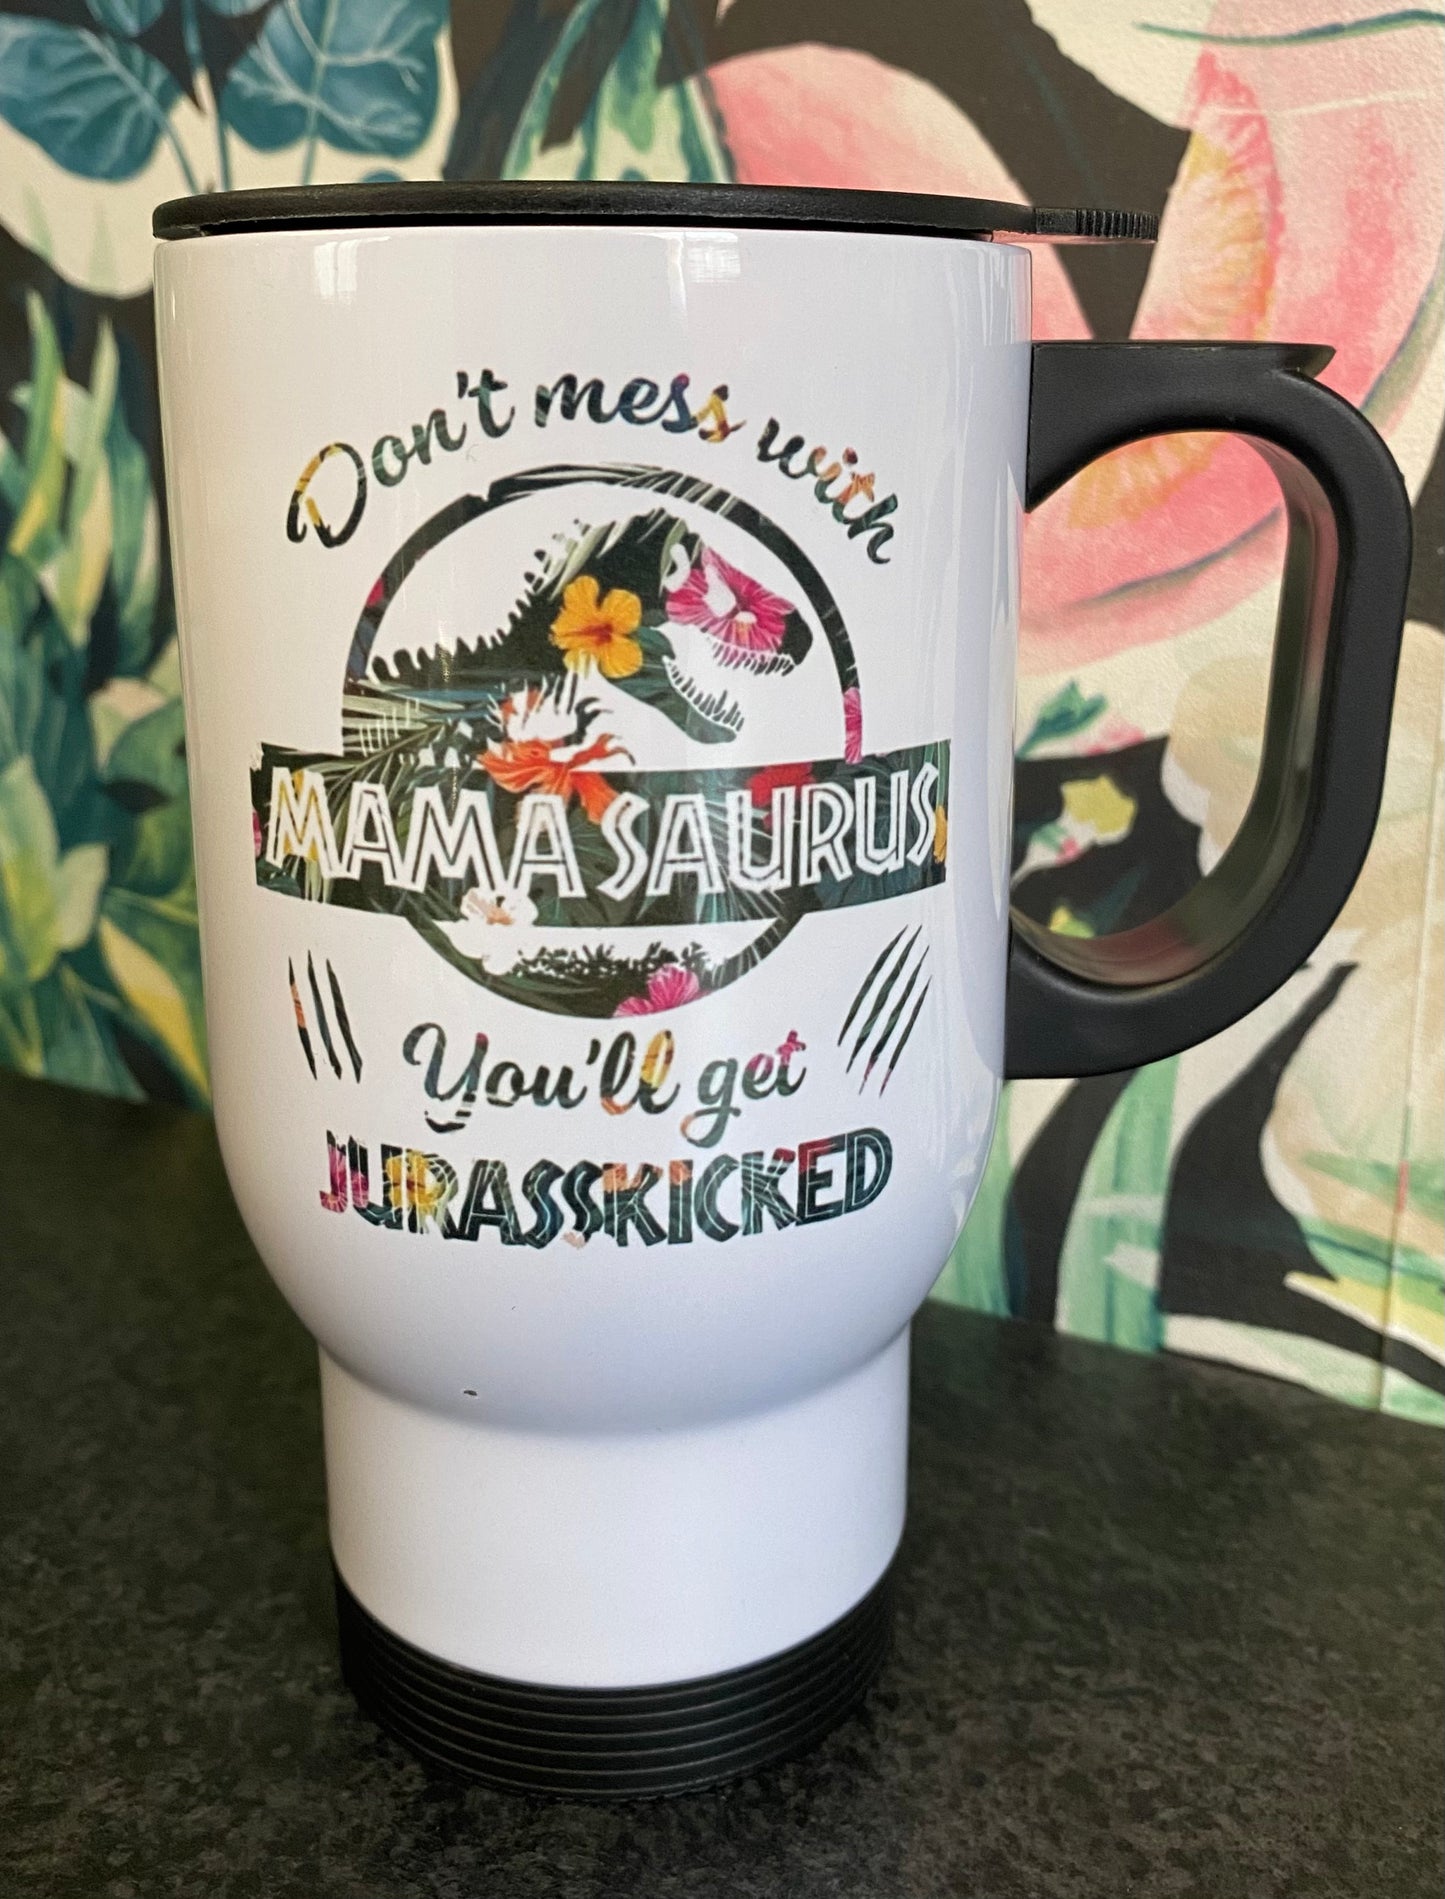 Mamasarus Jurassic Dinosaur, Travel Mug, Ceramic Mug, Coaster, Cushion, Water Bottle, Keyring